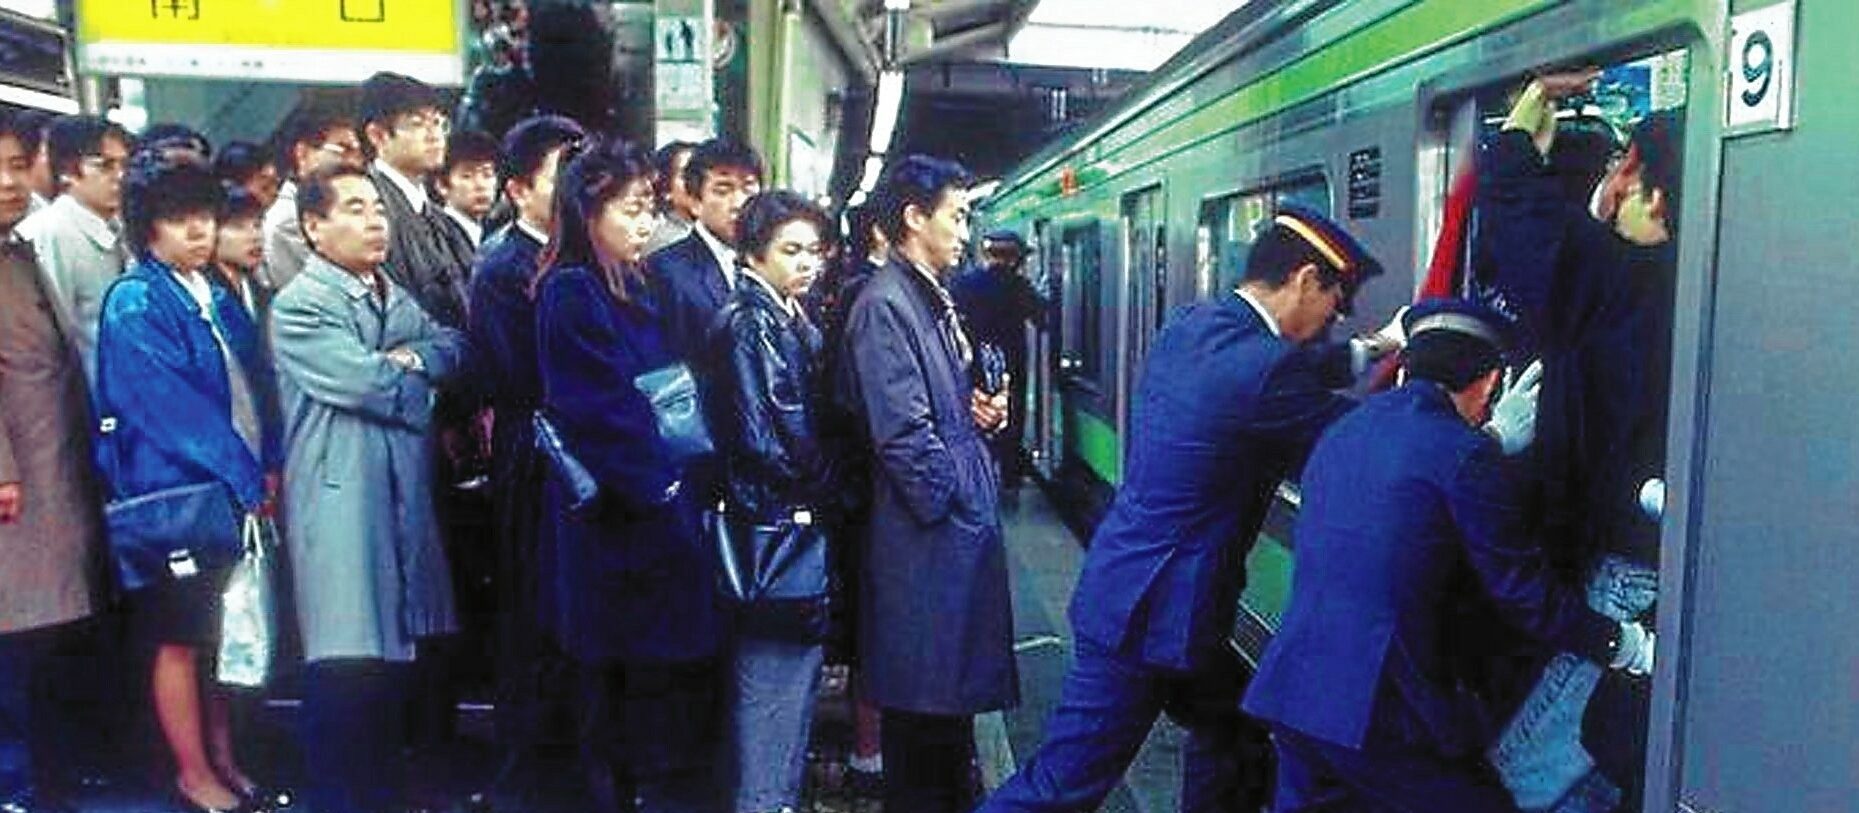 Subway Pushers Tokyo